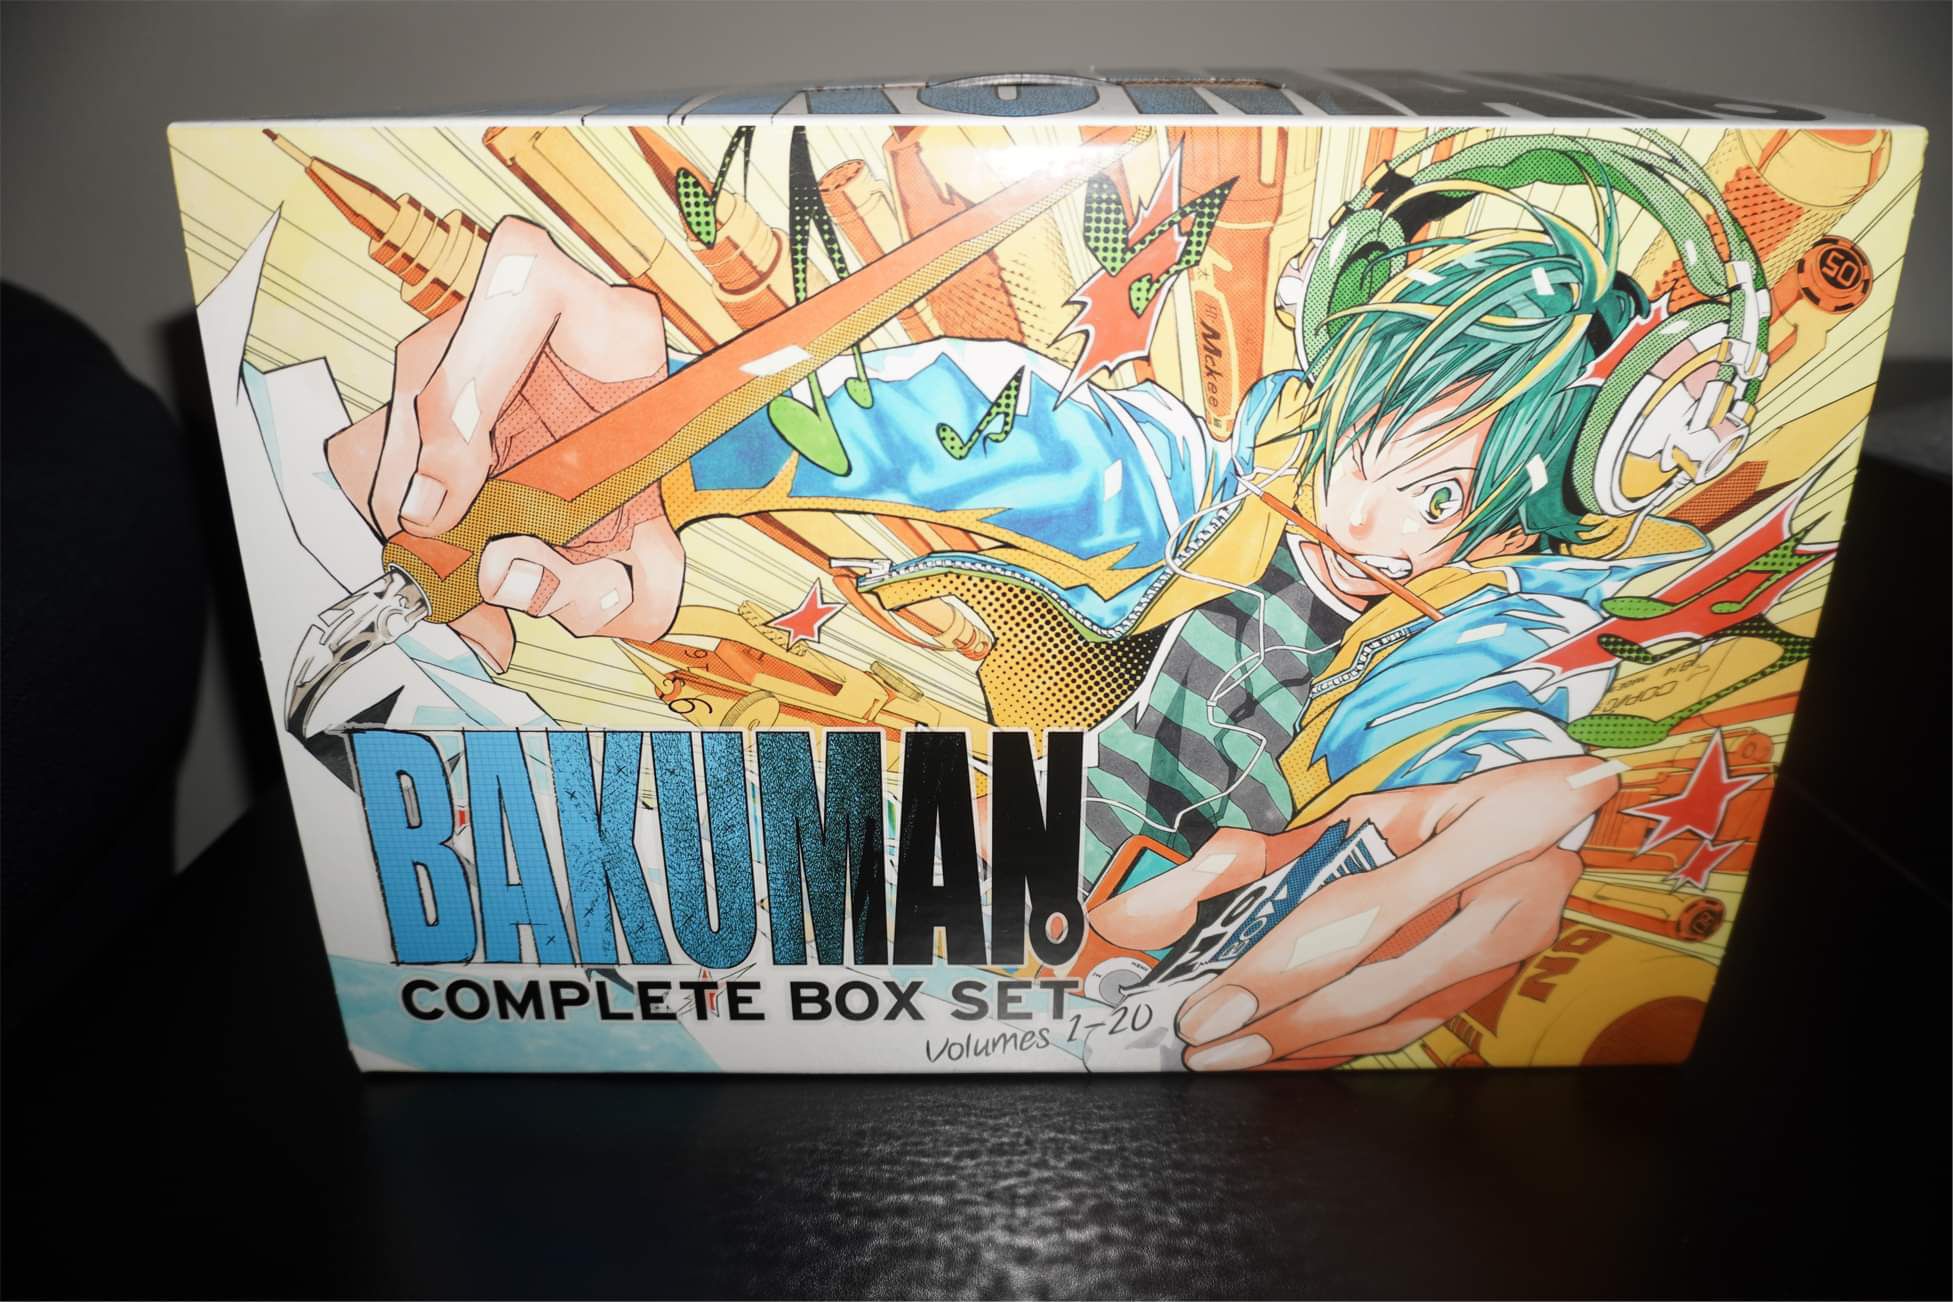 Bakuman Complete Box Set Volumes1-20